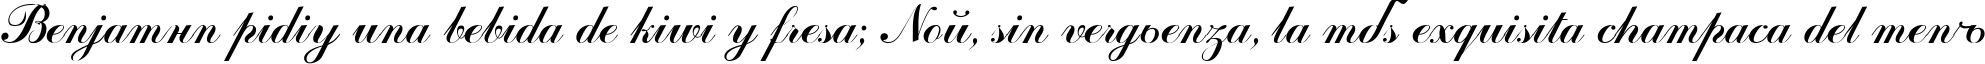 Пример написания шрифтом ArtScript текста на испанском